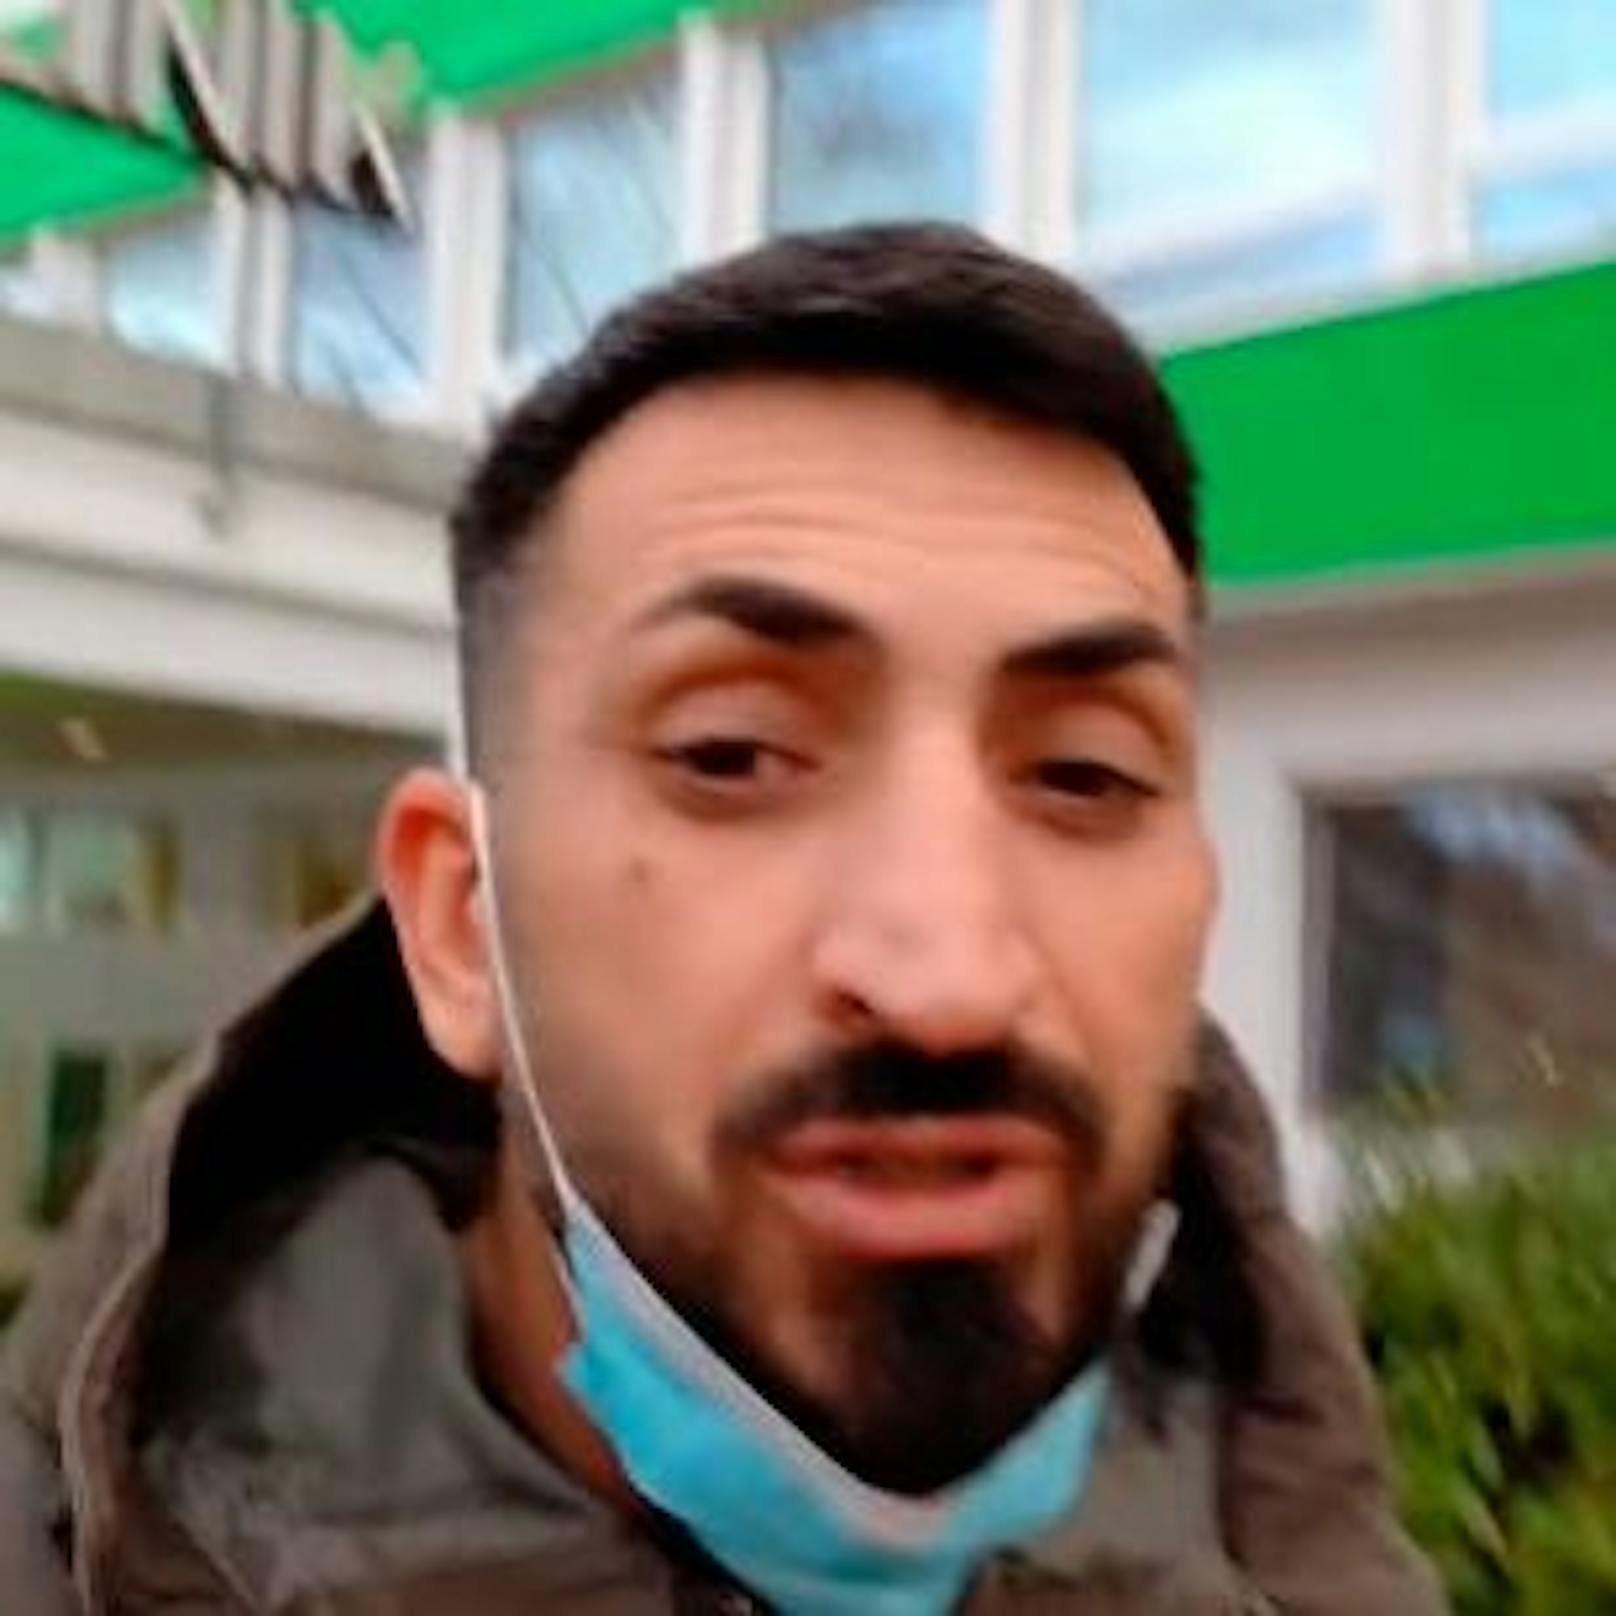 Mustafa Alin vor der Paracelsus-Klinik